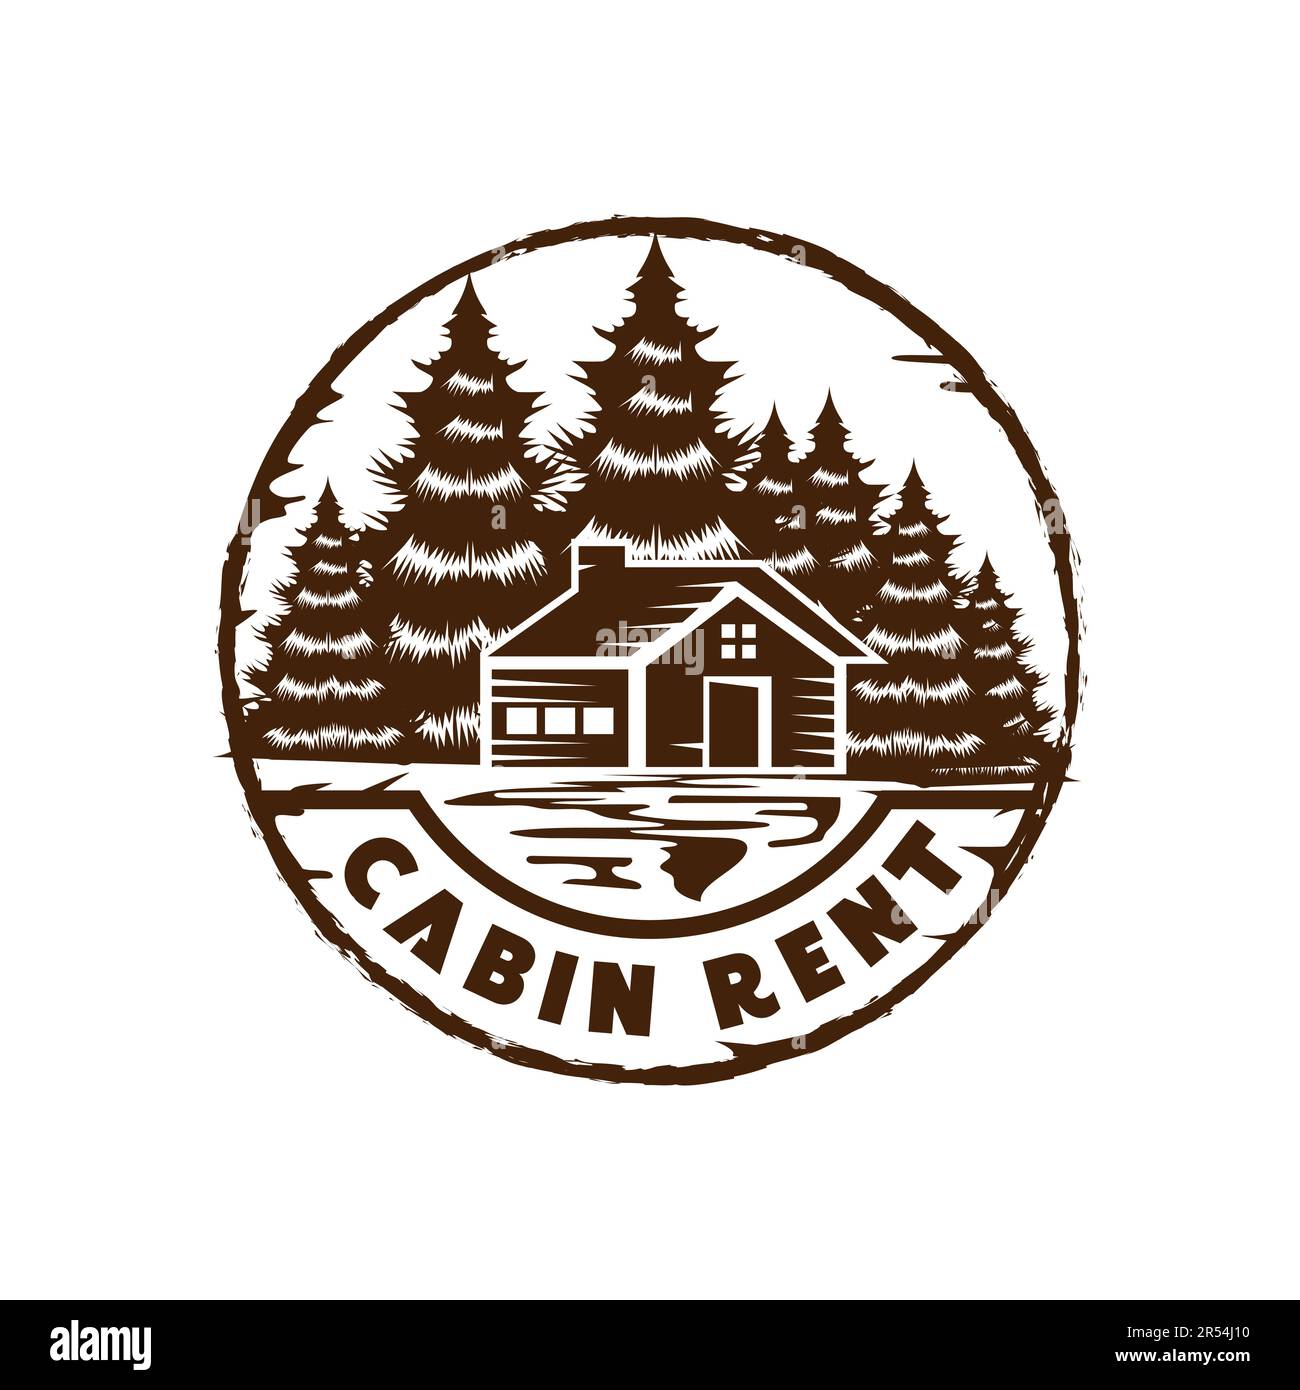 Vintage Retro Circular Pine Trees Forest mit Miete Cabin Chalet Logo Design Vector Stock Vektor